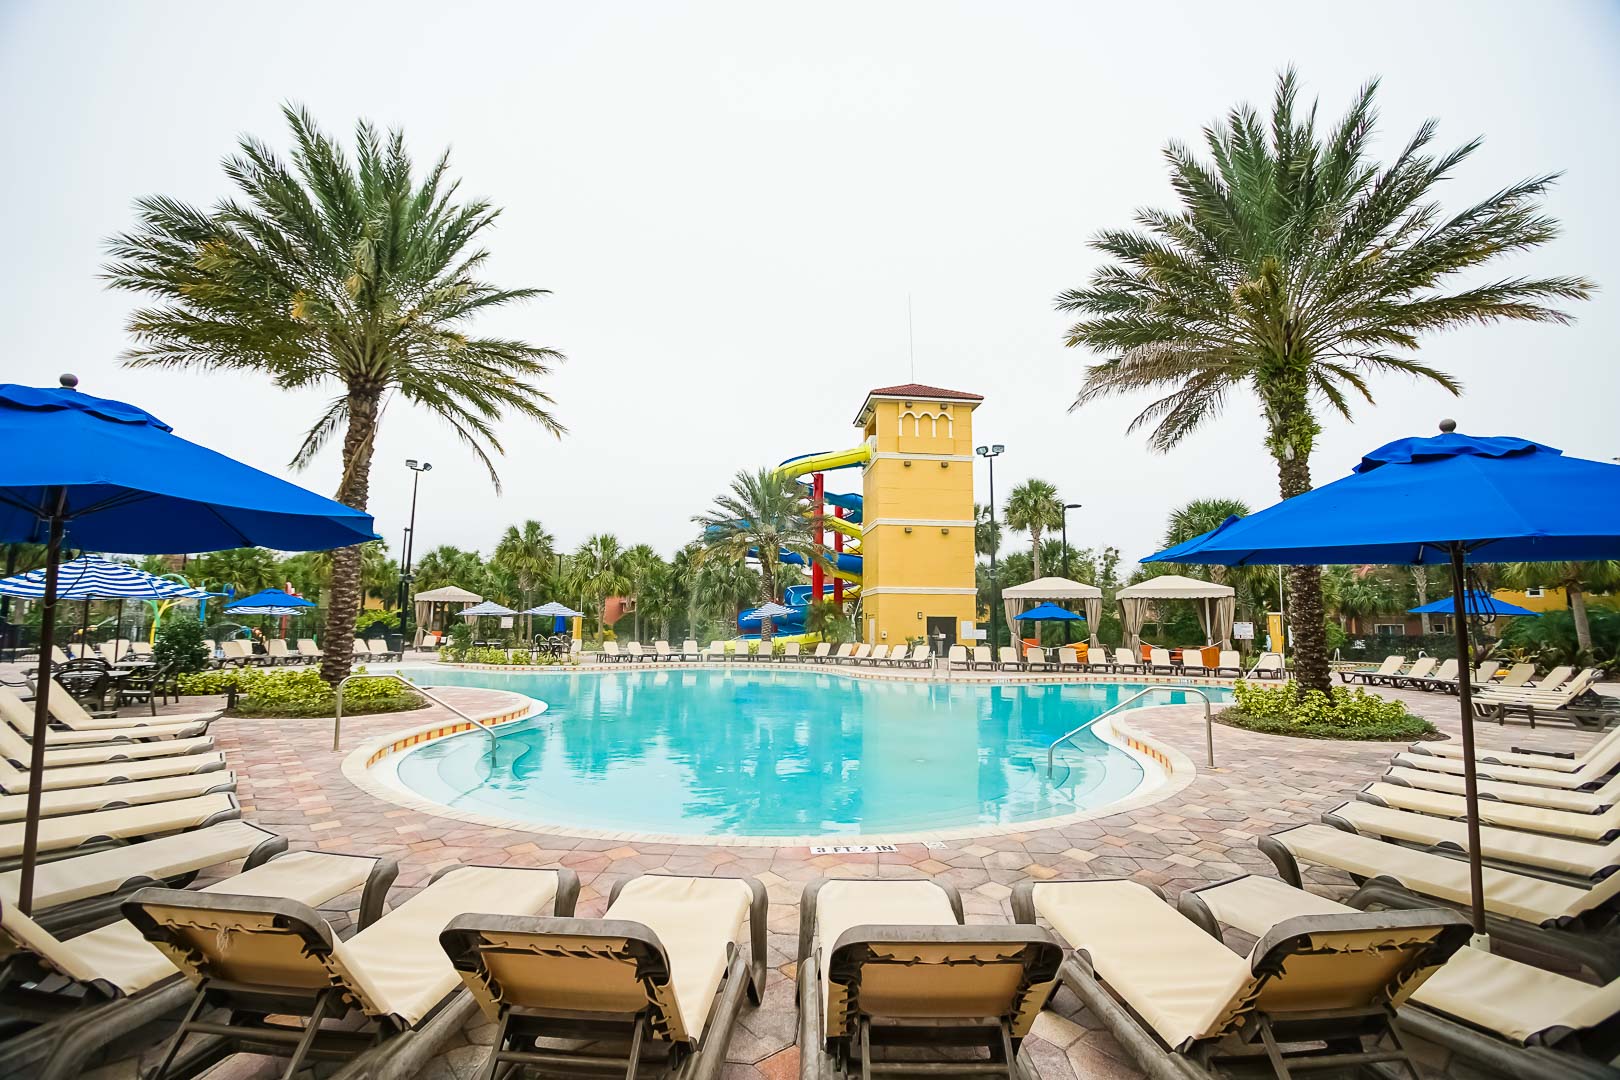 An inviting outdoor swimming pool at VRI's Fantasy World Resort in Florida.